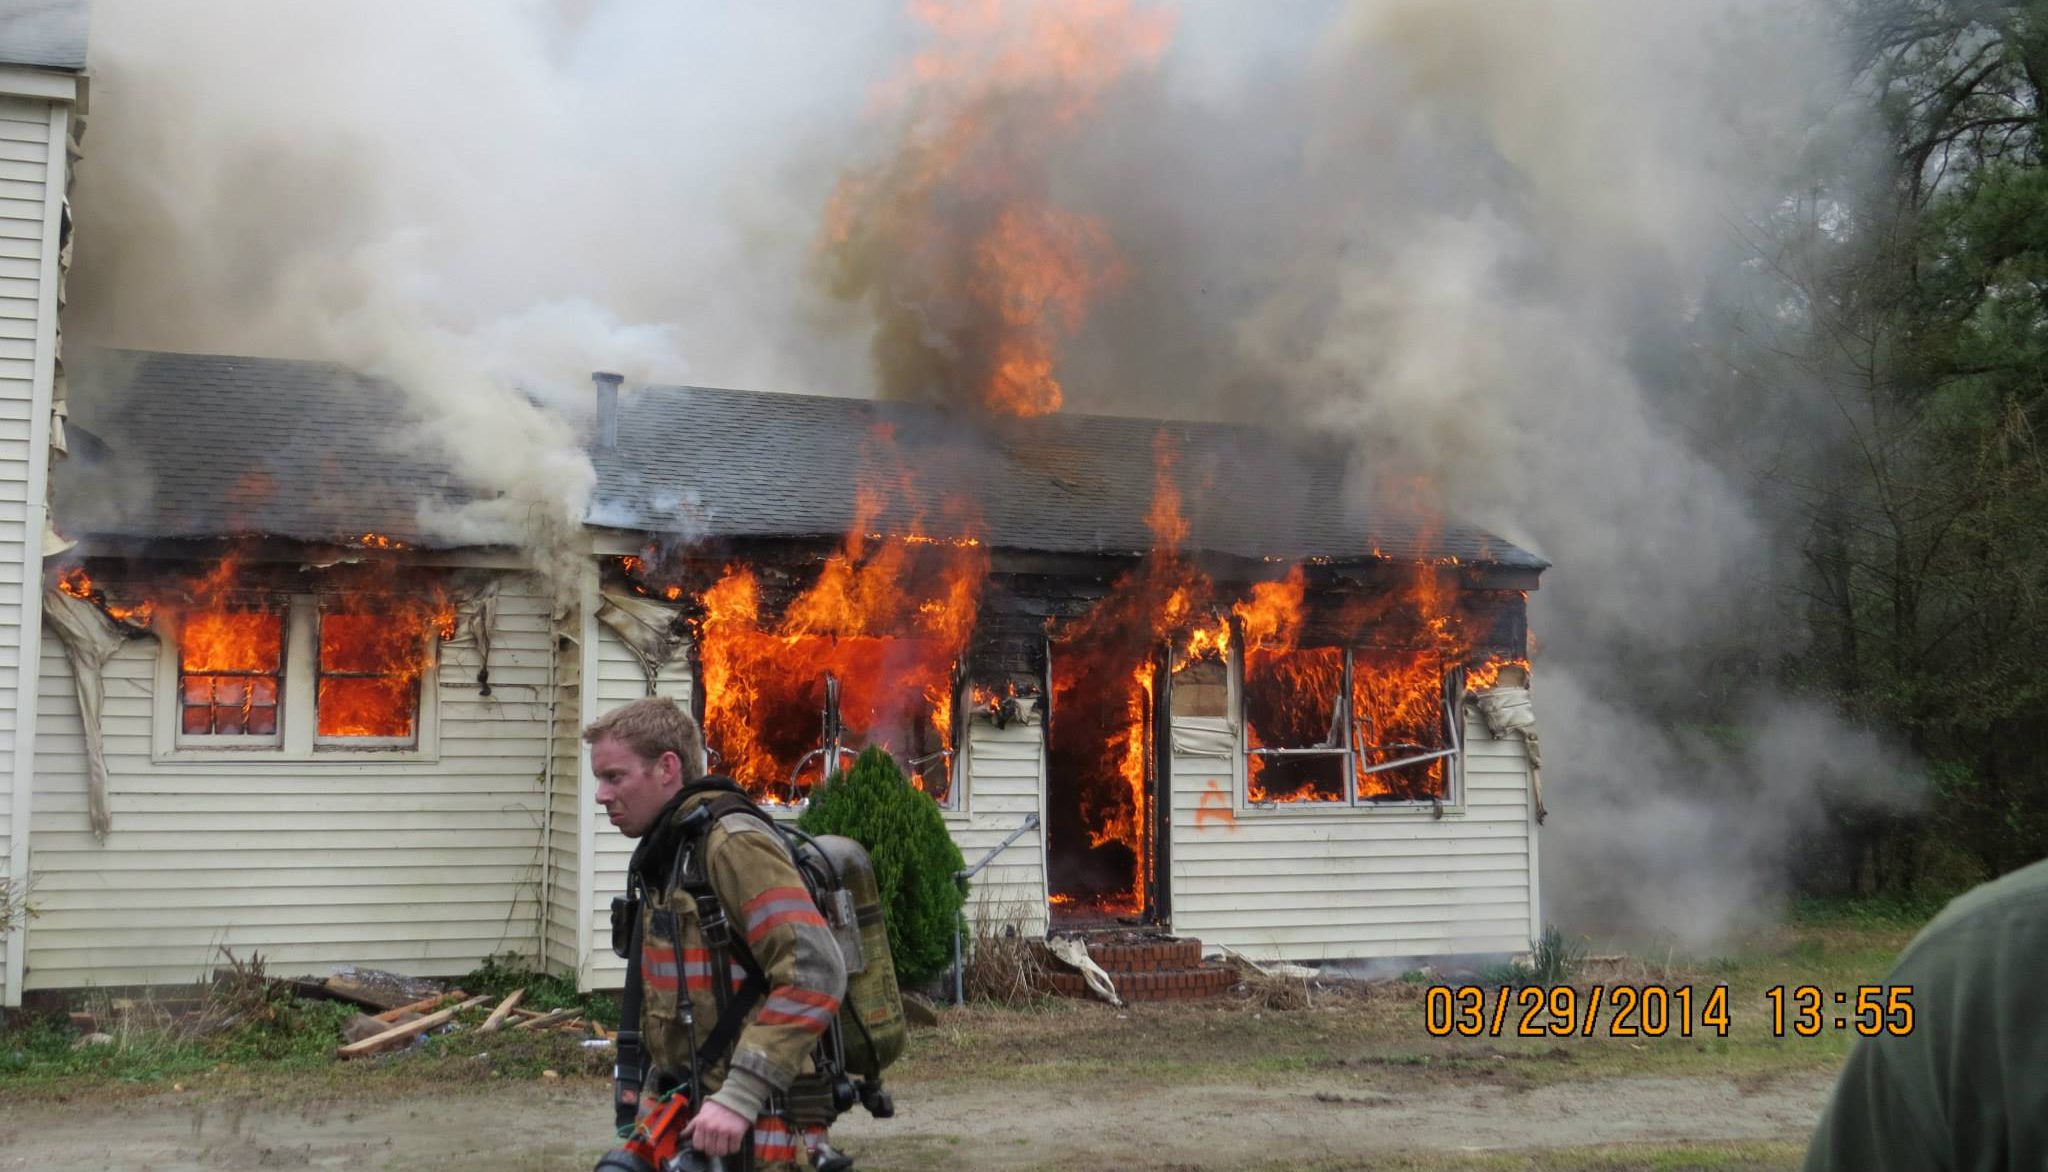 Fireman walking past burning building.